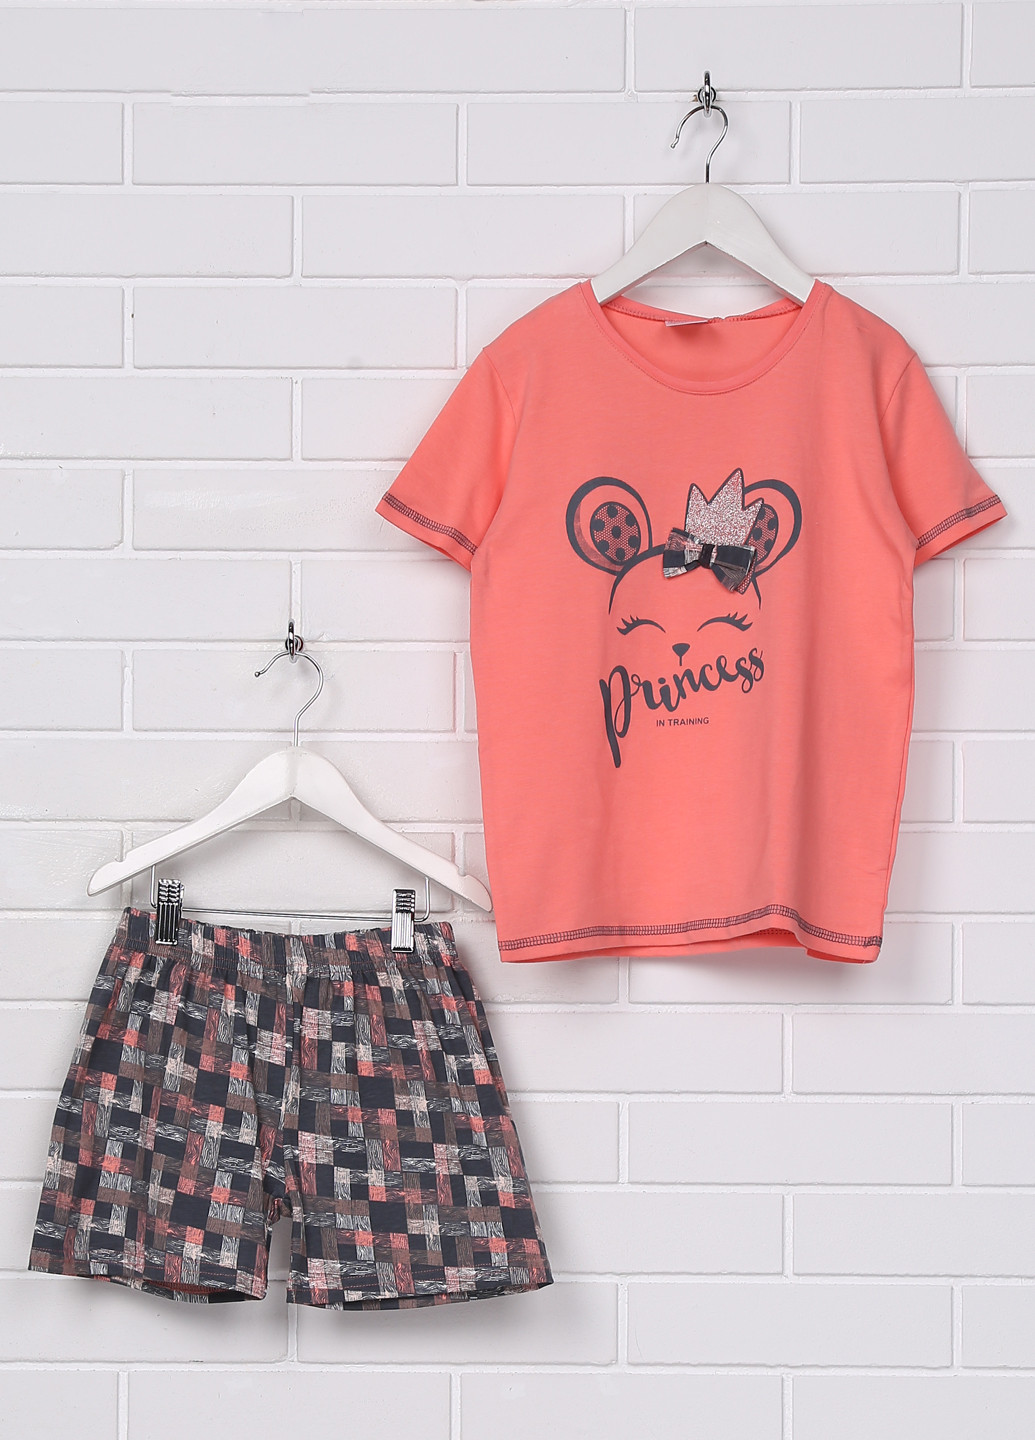 Персиковая всесезон пижама (футболка, шорты) футболка + шорты Nicoletta